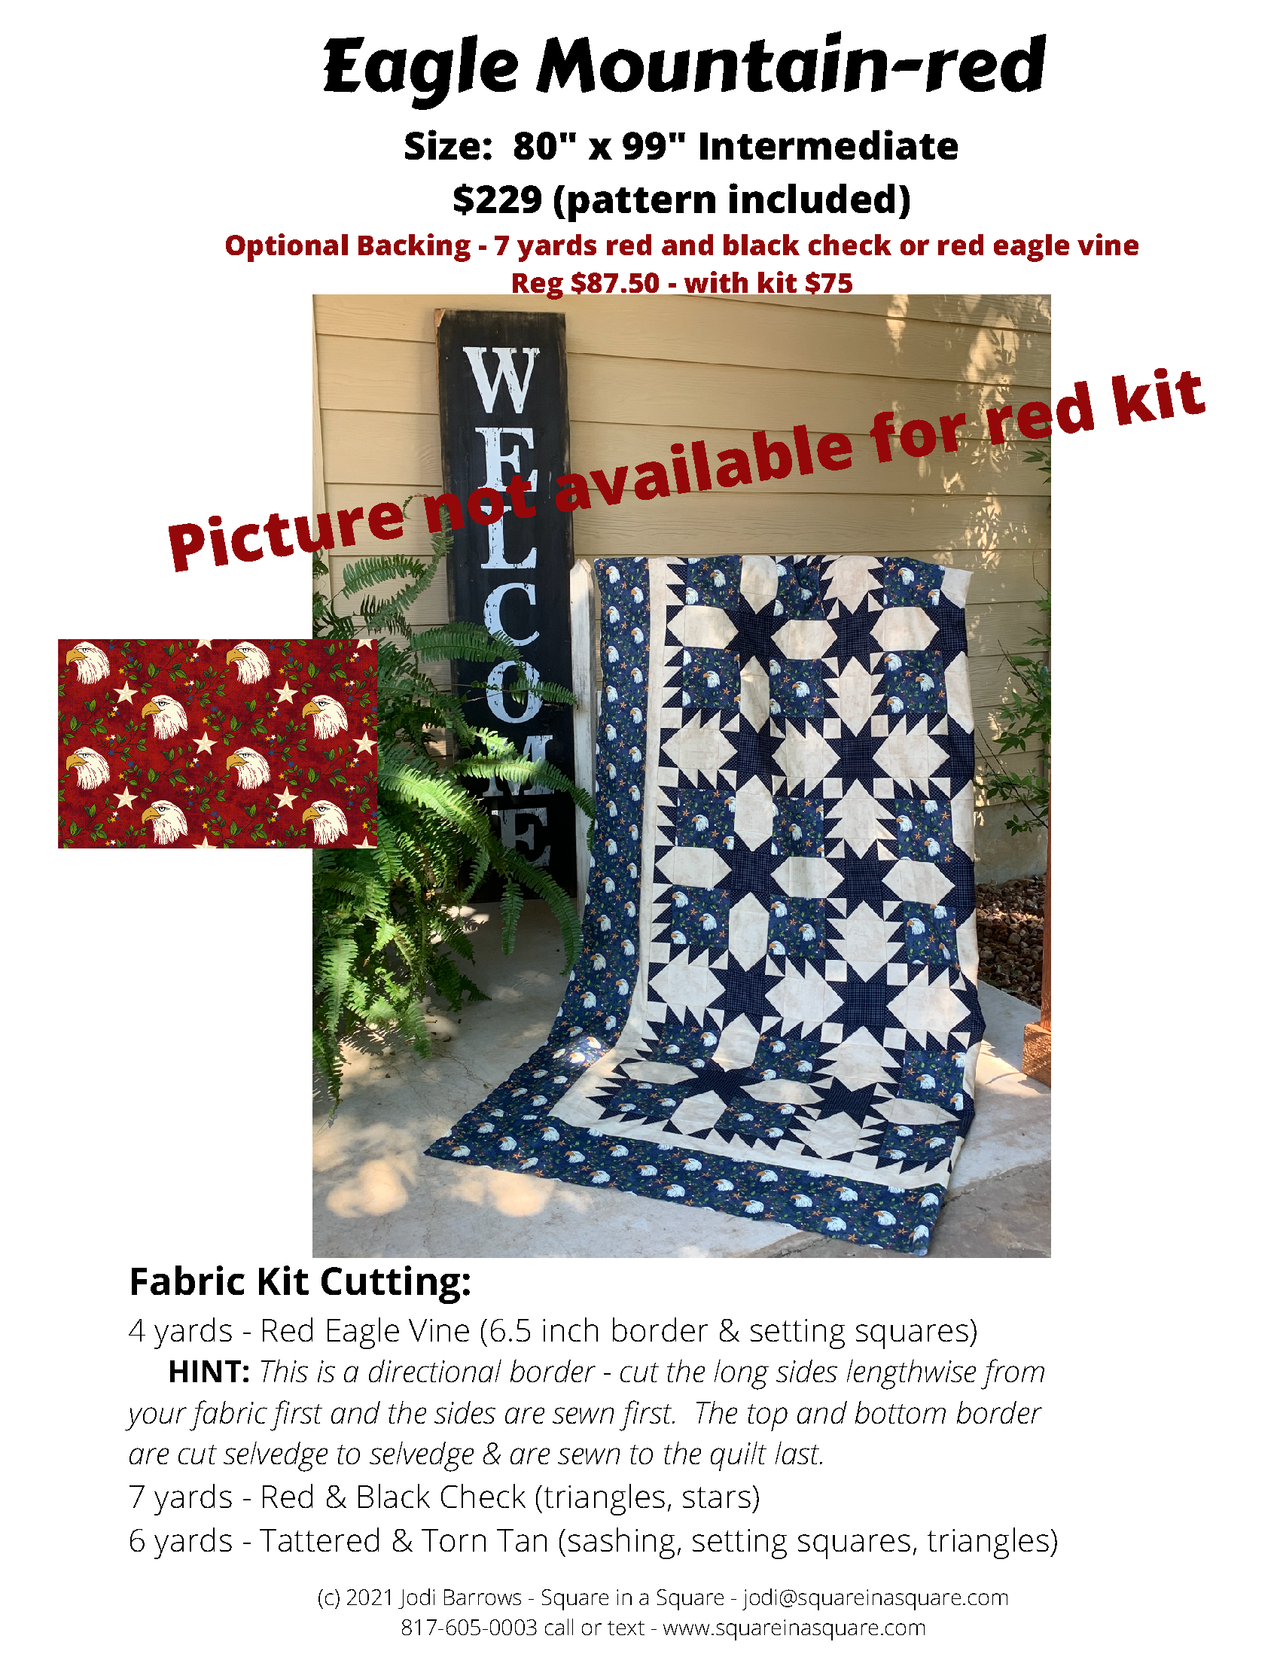 Eagle Mountain Red fabric kit - Choose